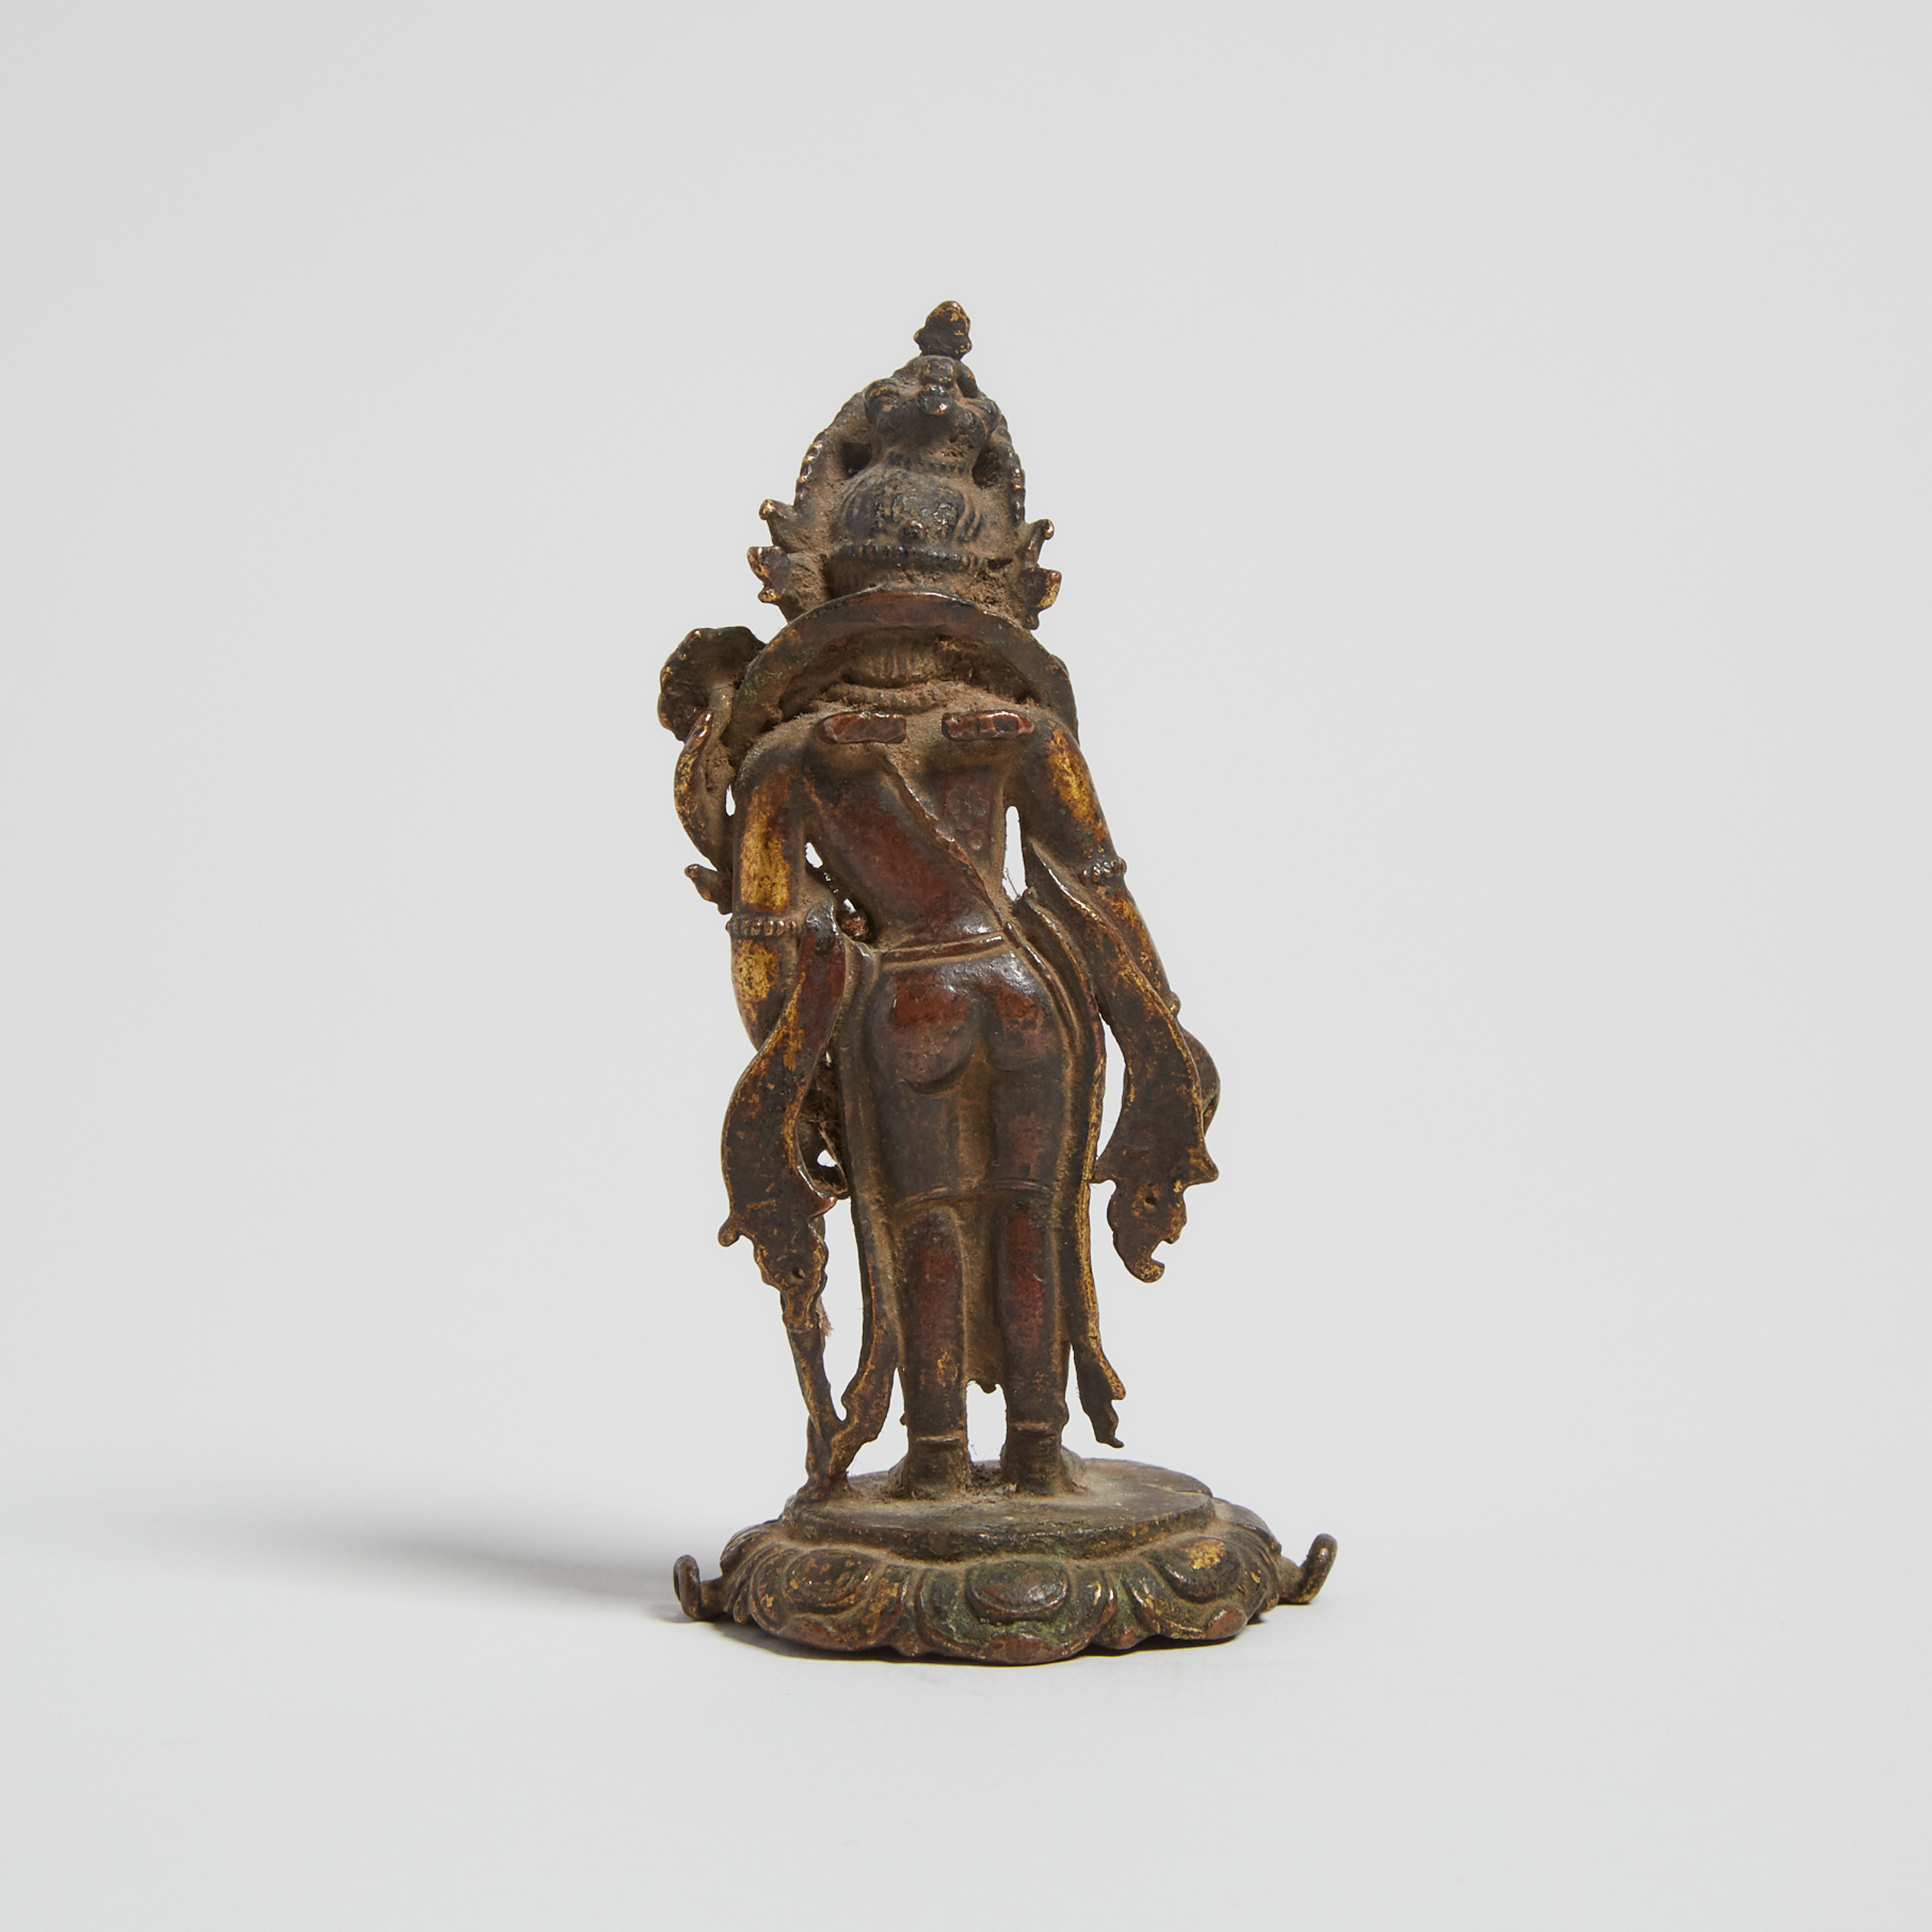 A Small Gilt Bronze Figure of Padmapani, Nepal, 15th Century or Later